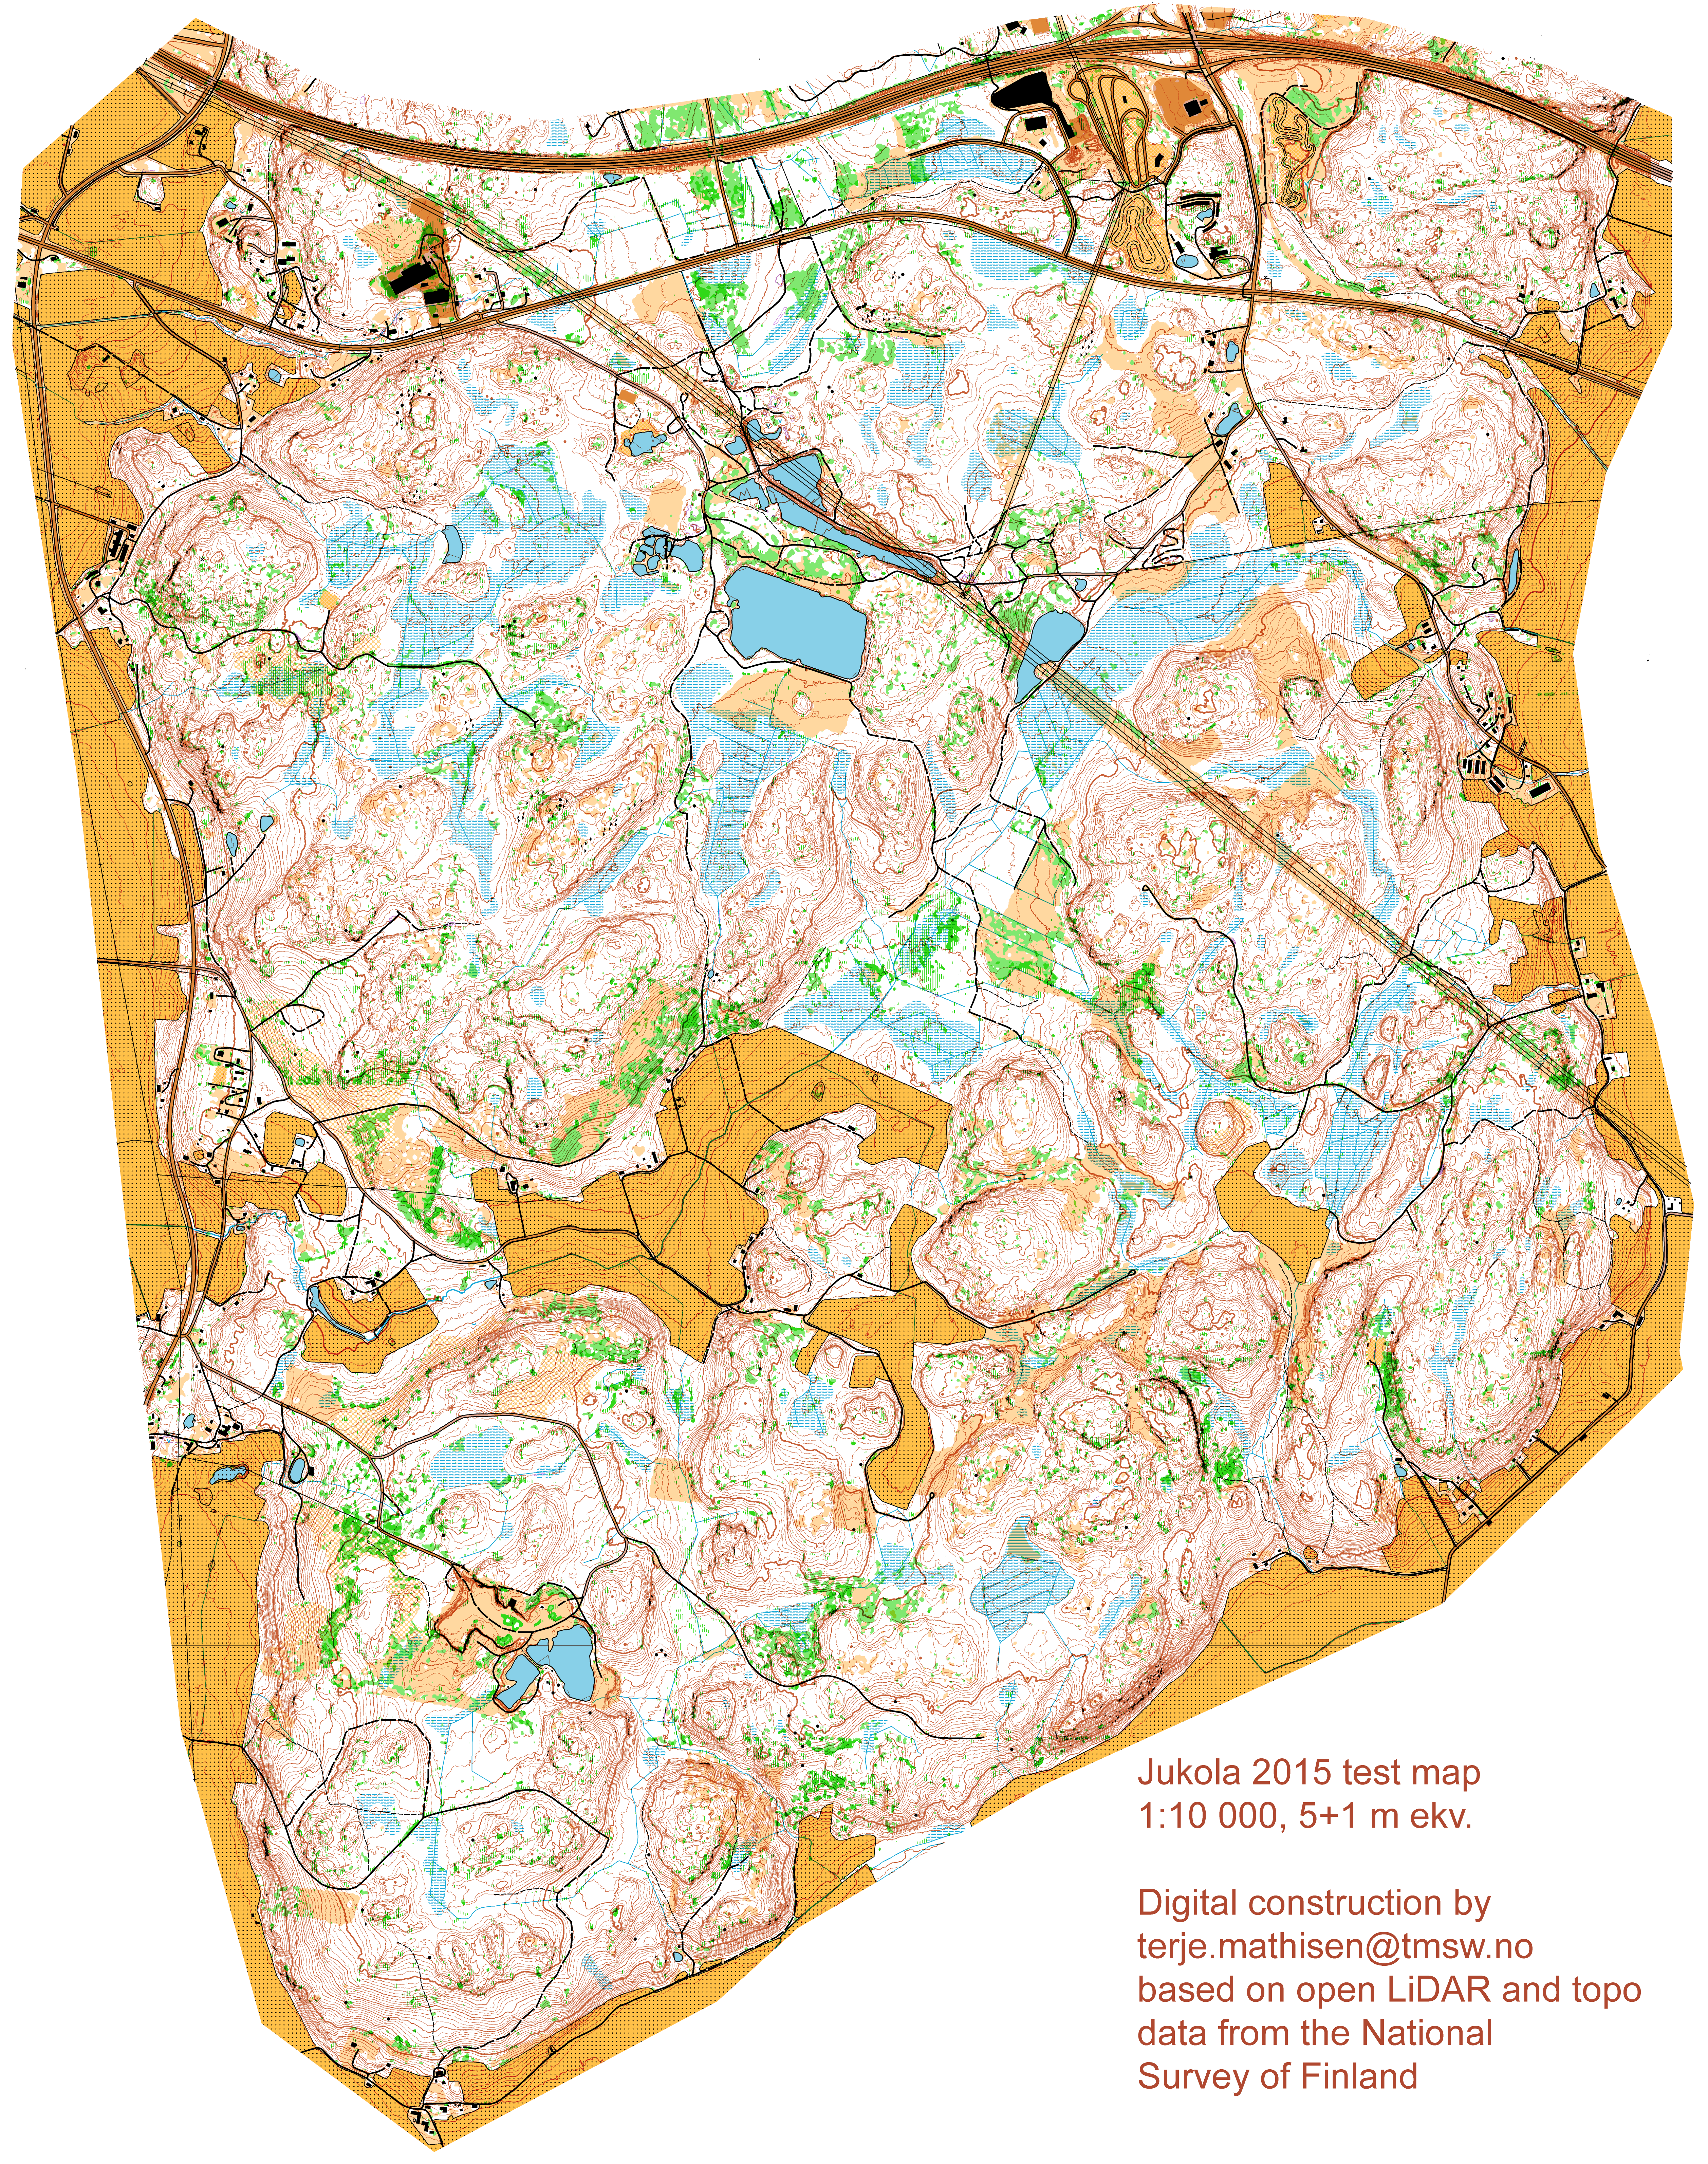 Jukola 2015 test map ver 2 (19-06-2014)